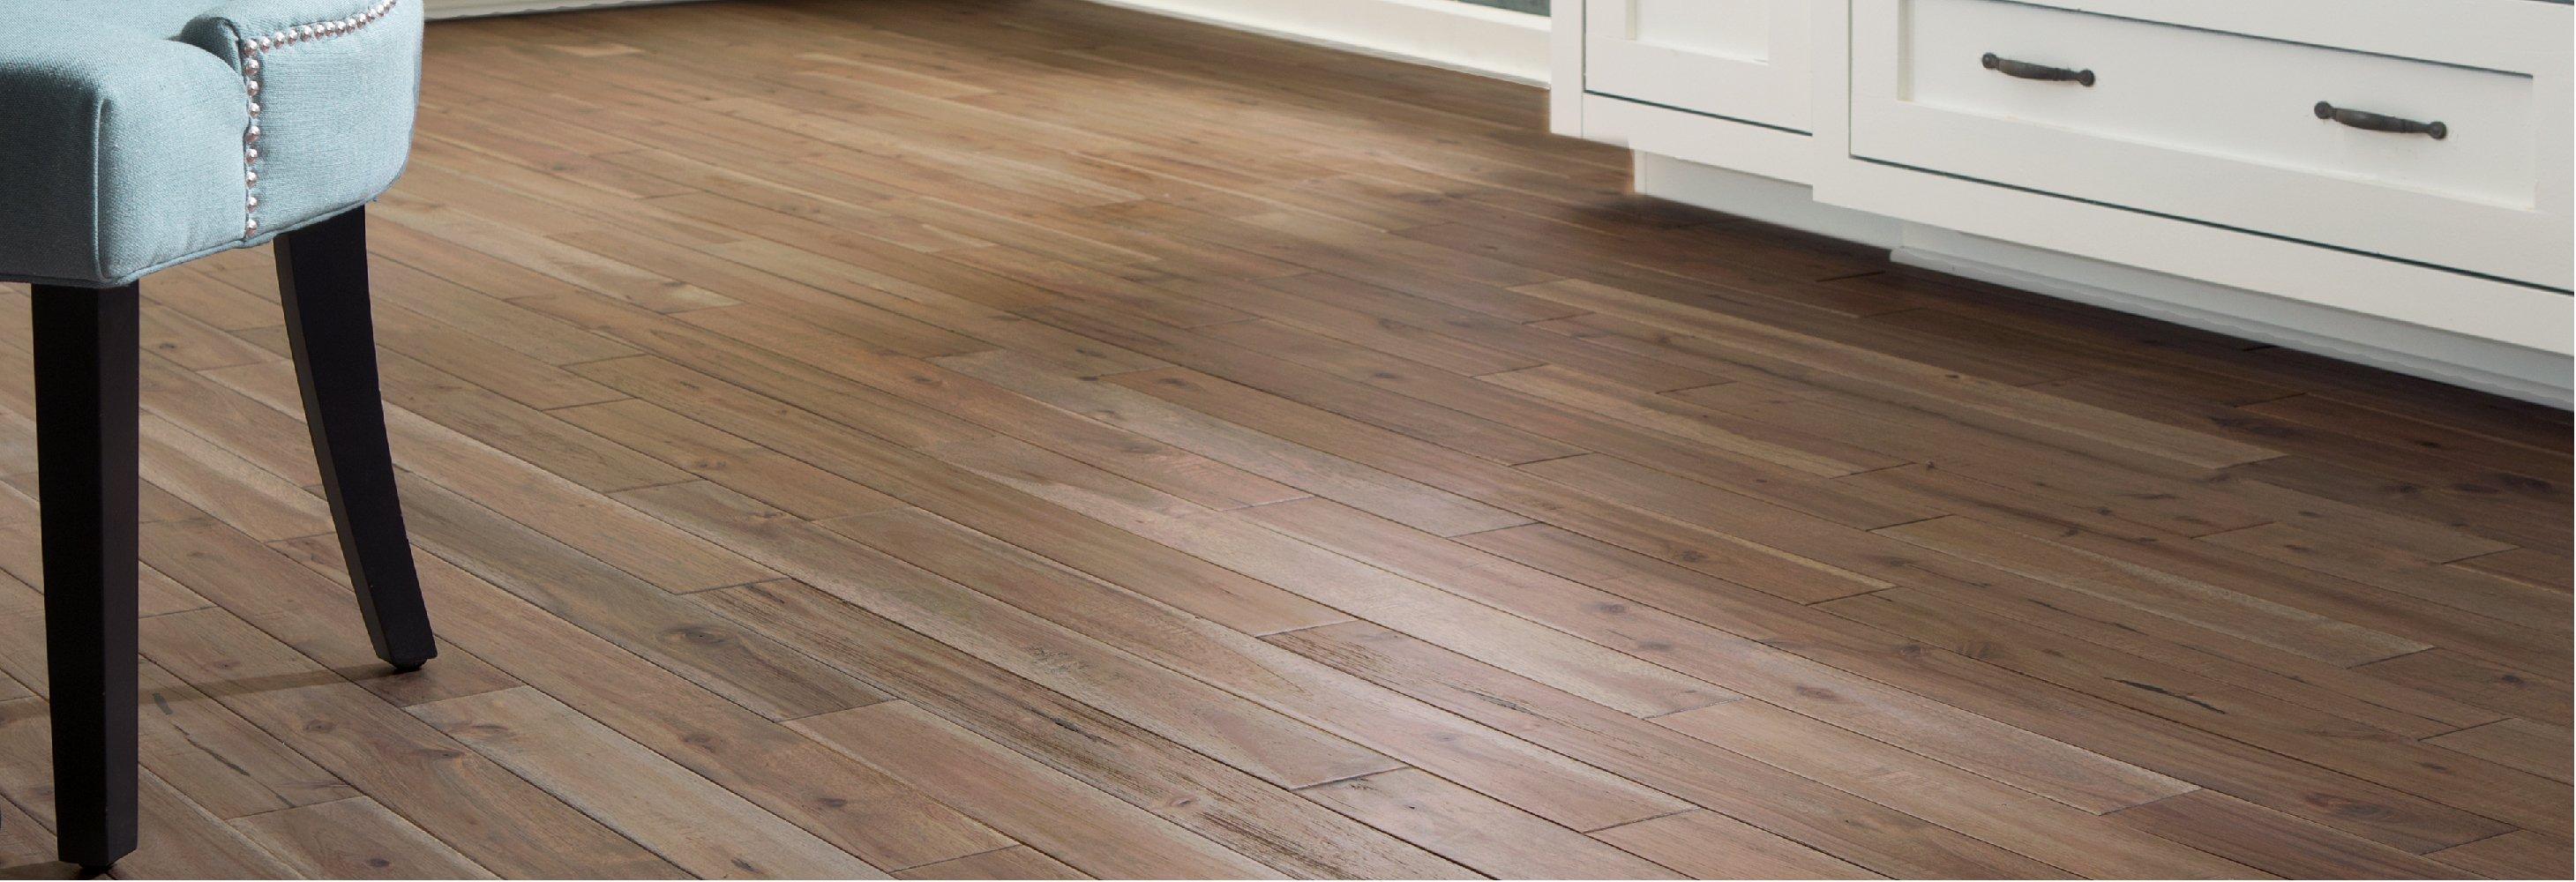 Solid wood floor solid hardwood flooring MTIUYEN